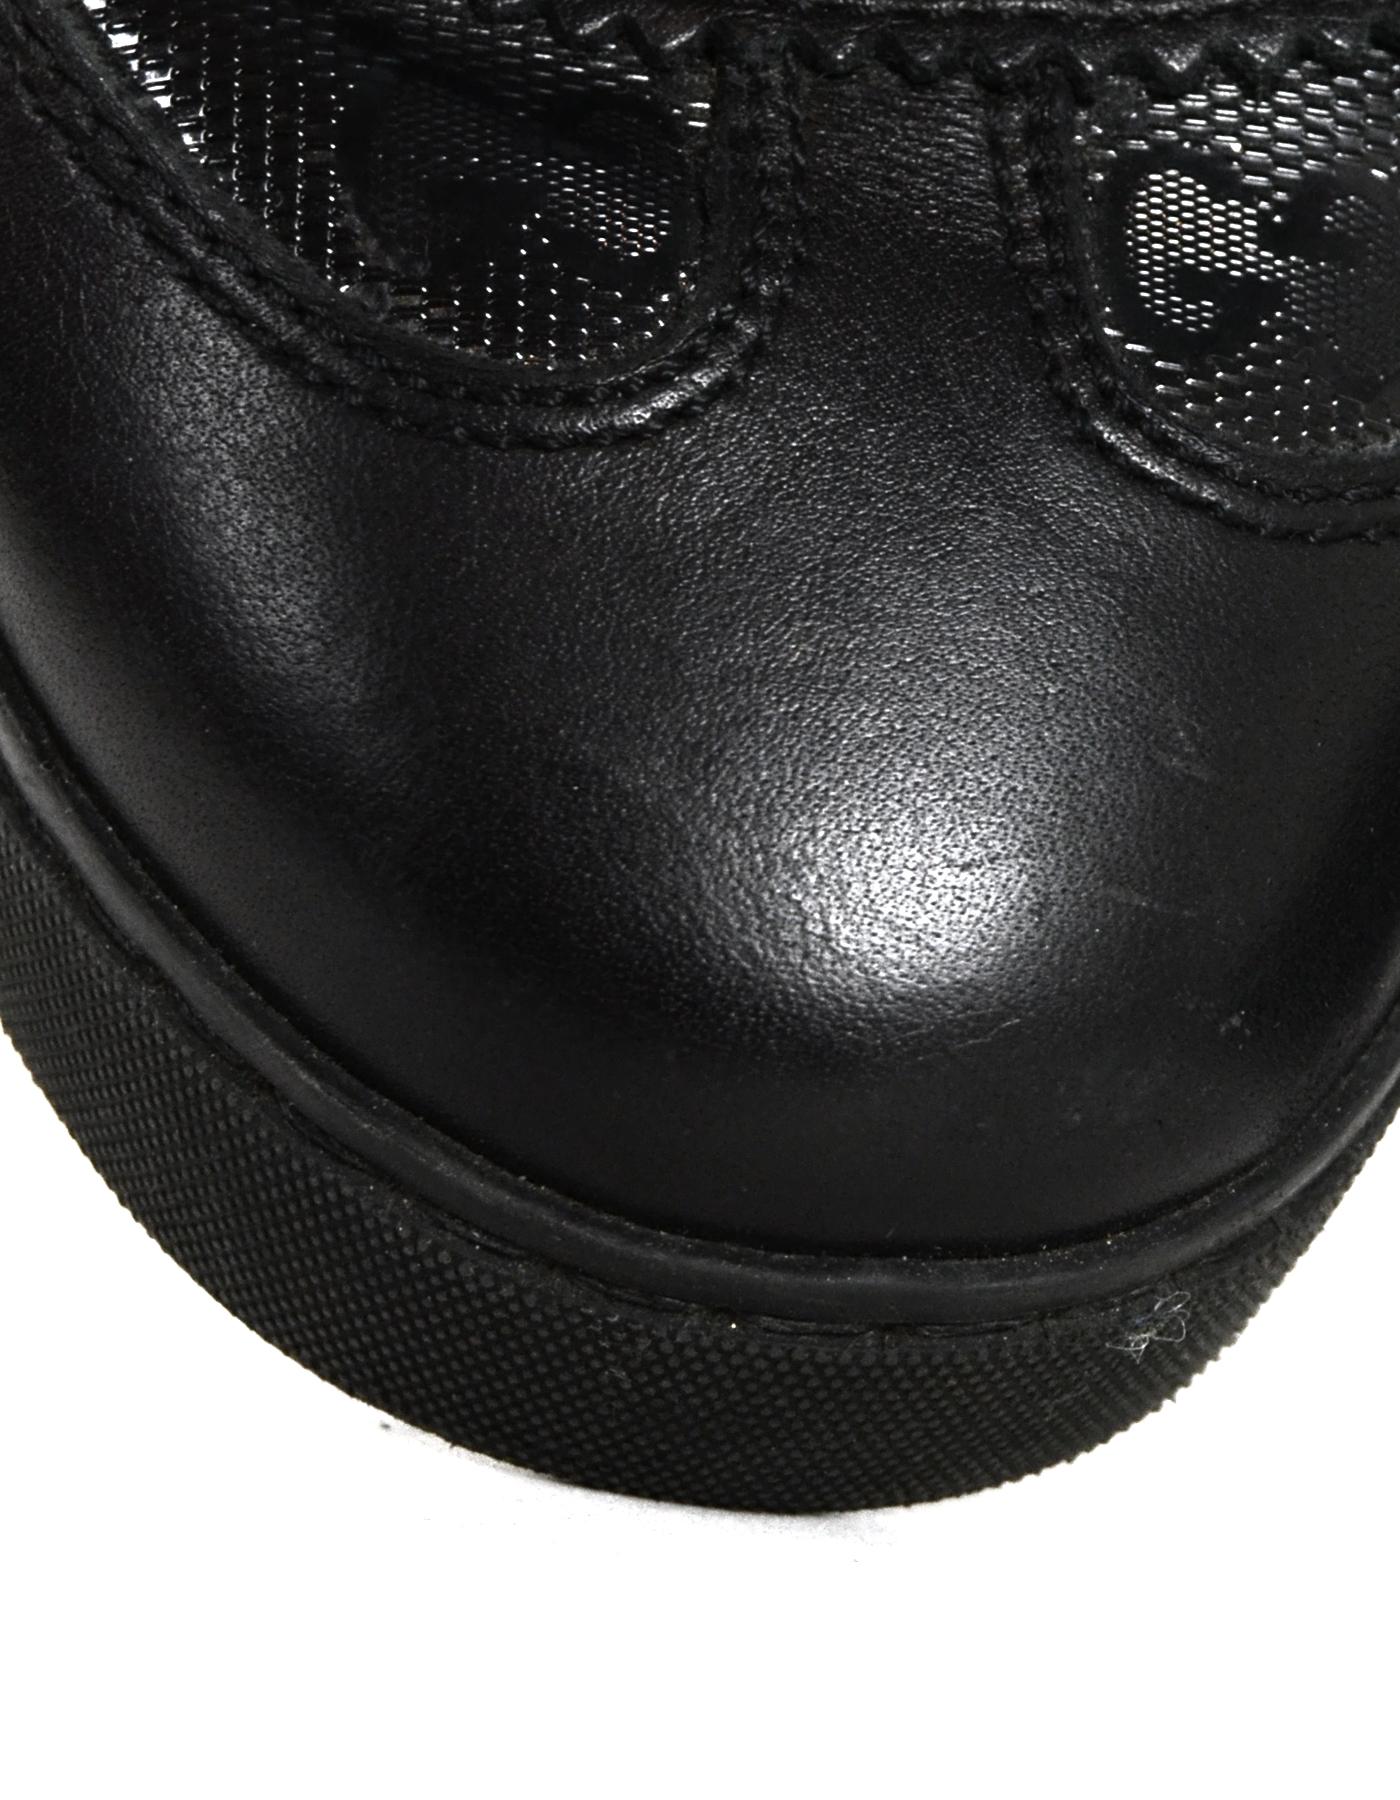 Gucci Black Monogram Sneakers w/ Leather Trim sz 36.5 For Sale 2